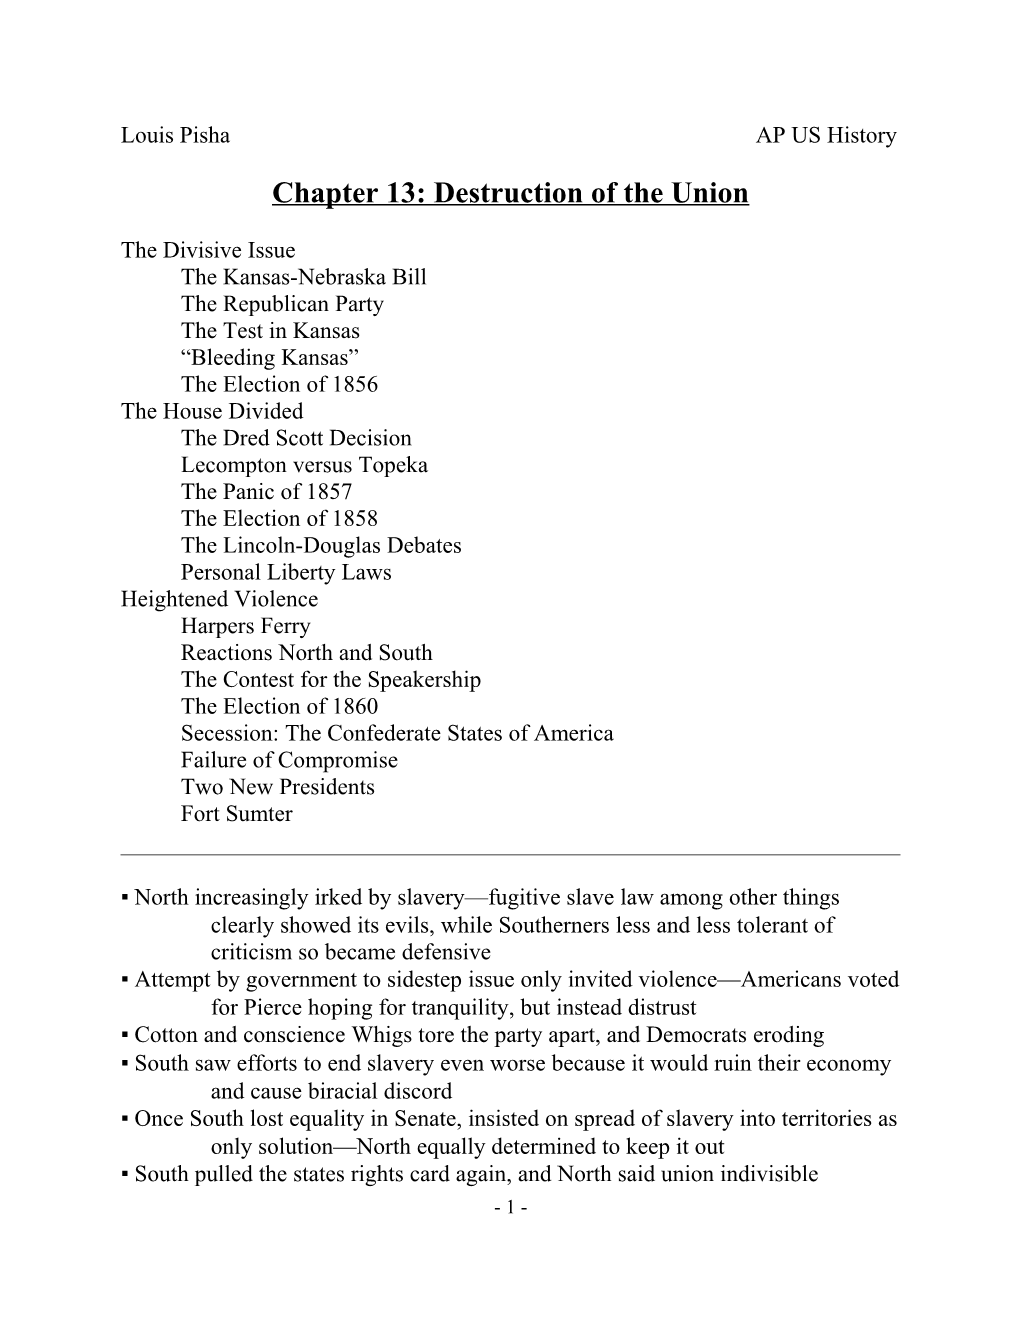 Chapter 13: Destruction of the Union